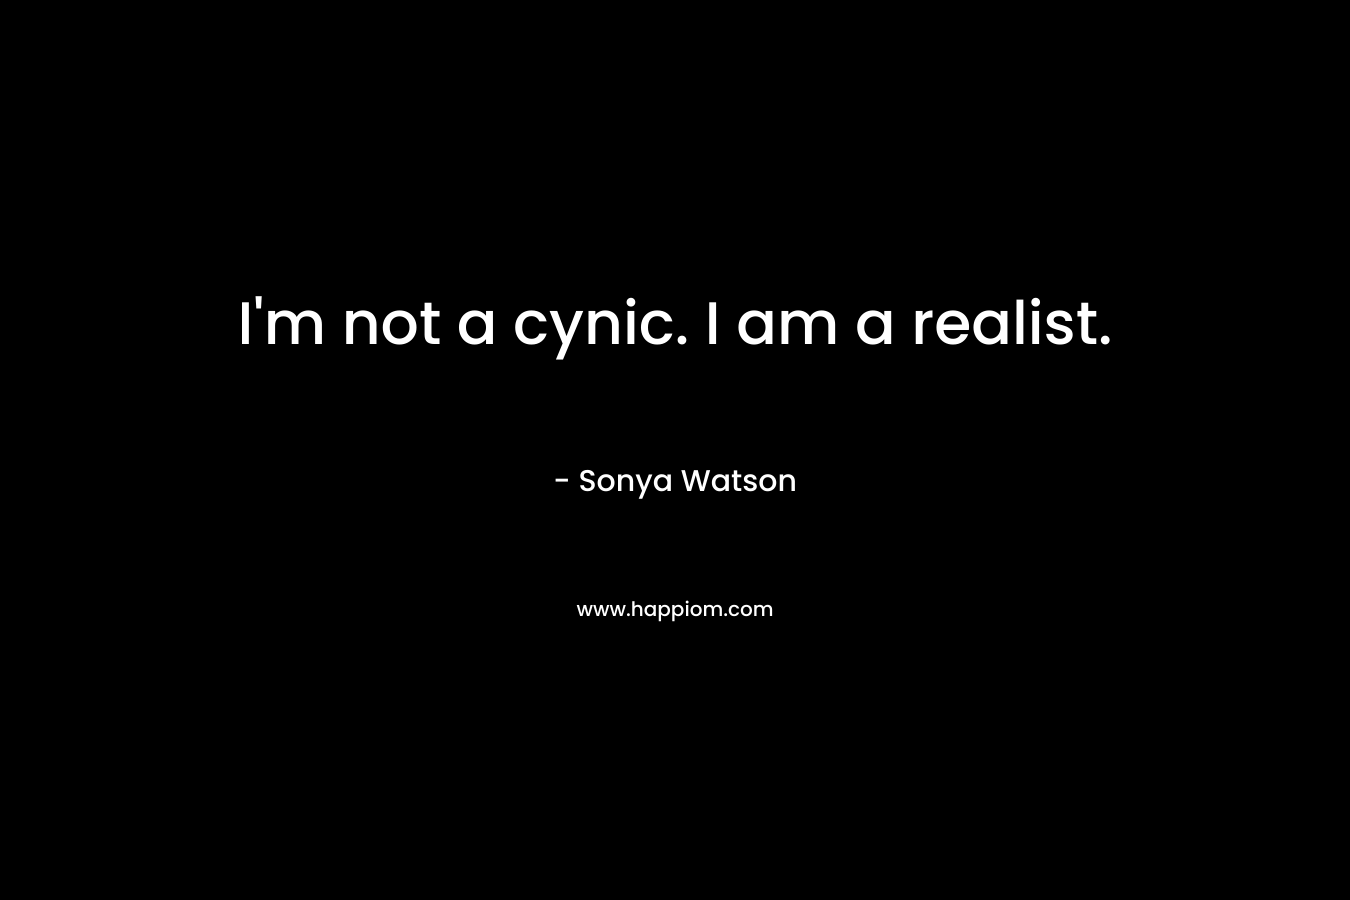 I'm not a cynic. I am a realist.